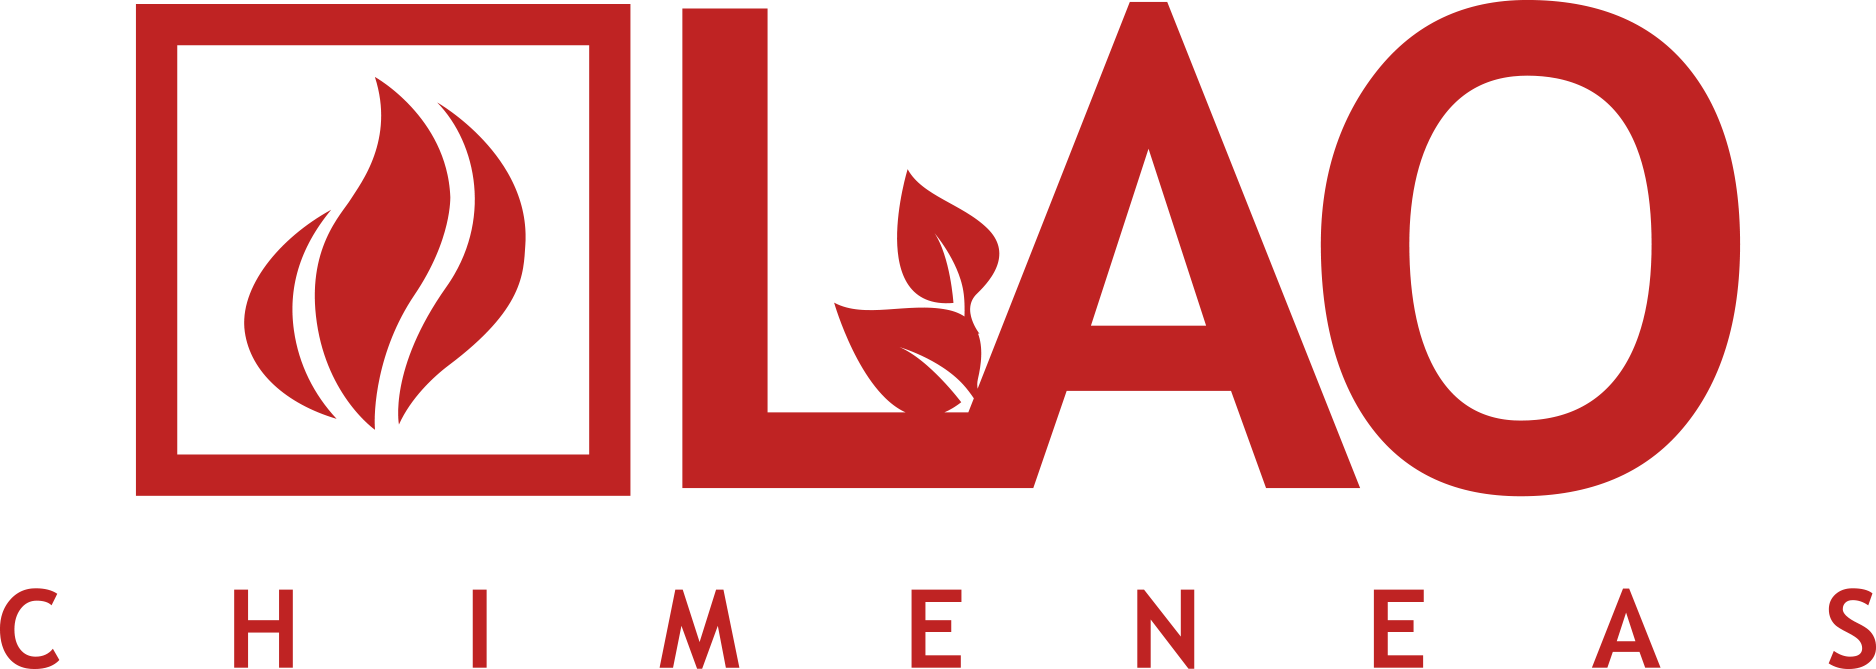 Chimeneas LAO Logo